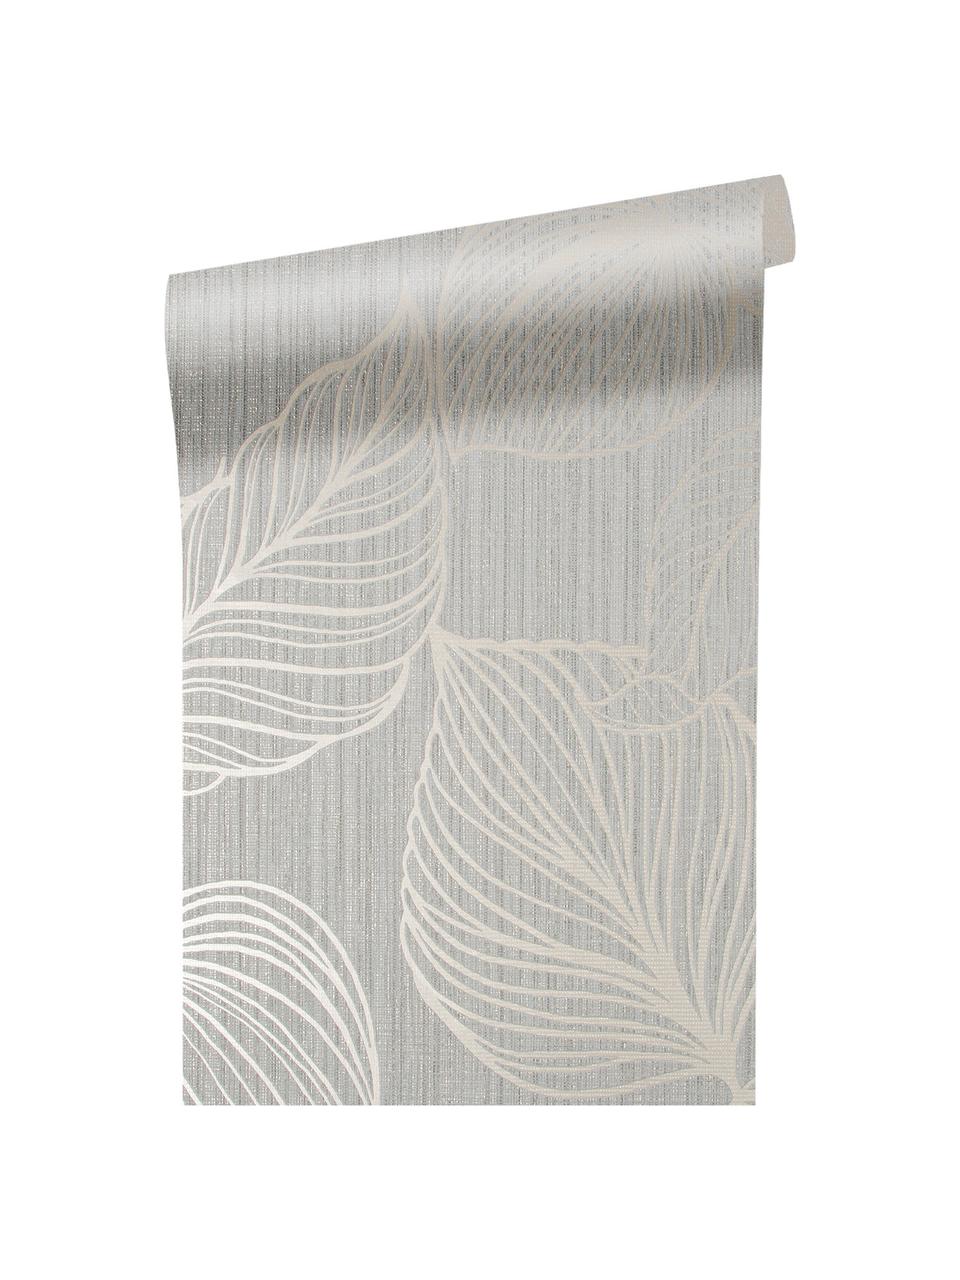 Tapete Luxus Fine Blatter, Vlies, Silberfarben, Grau, 52 x 1005 cm